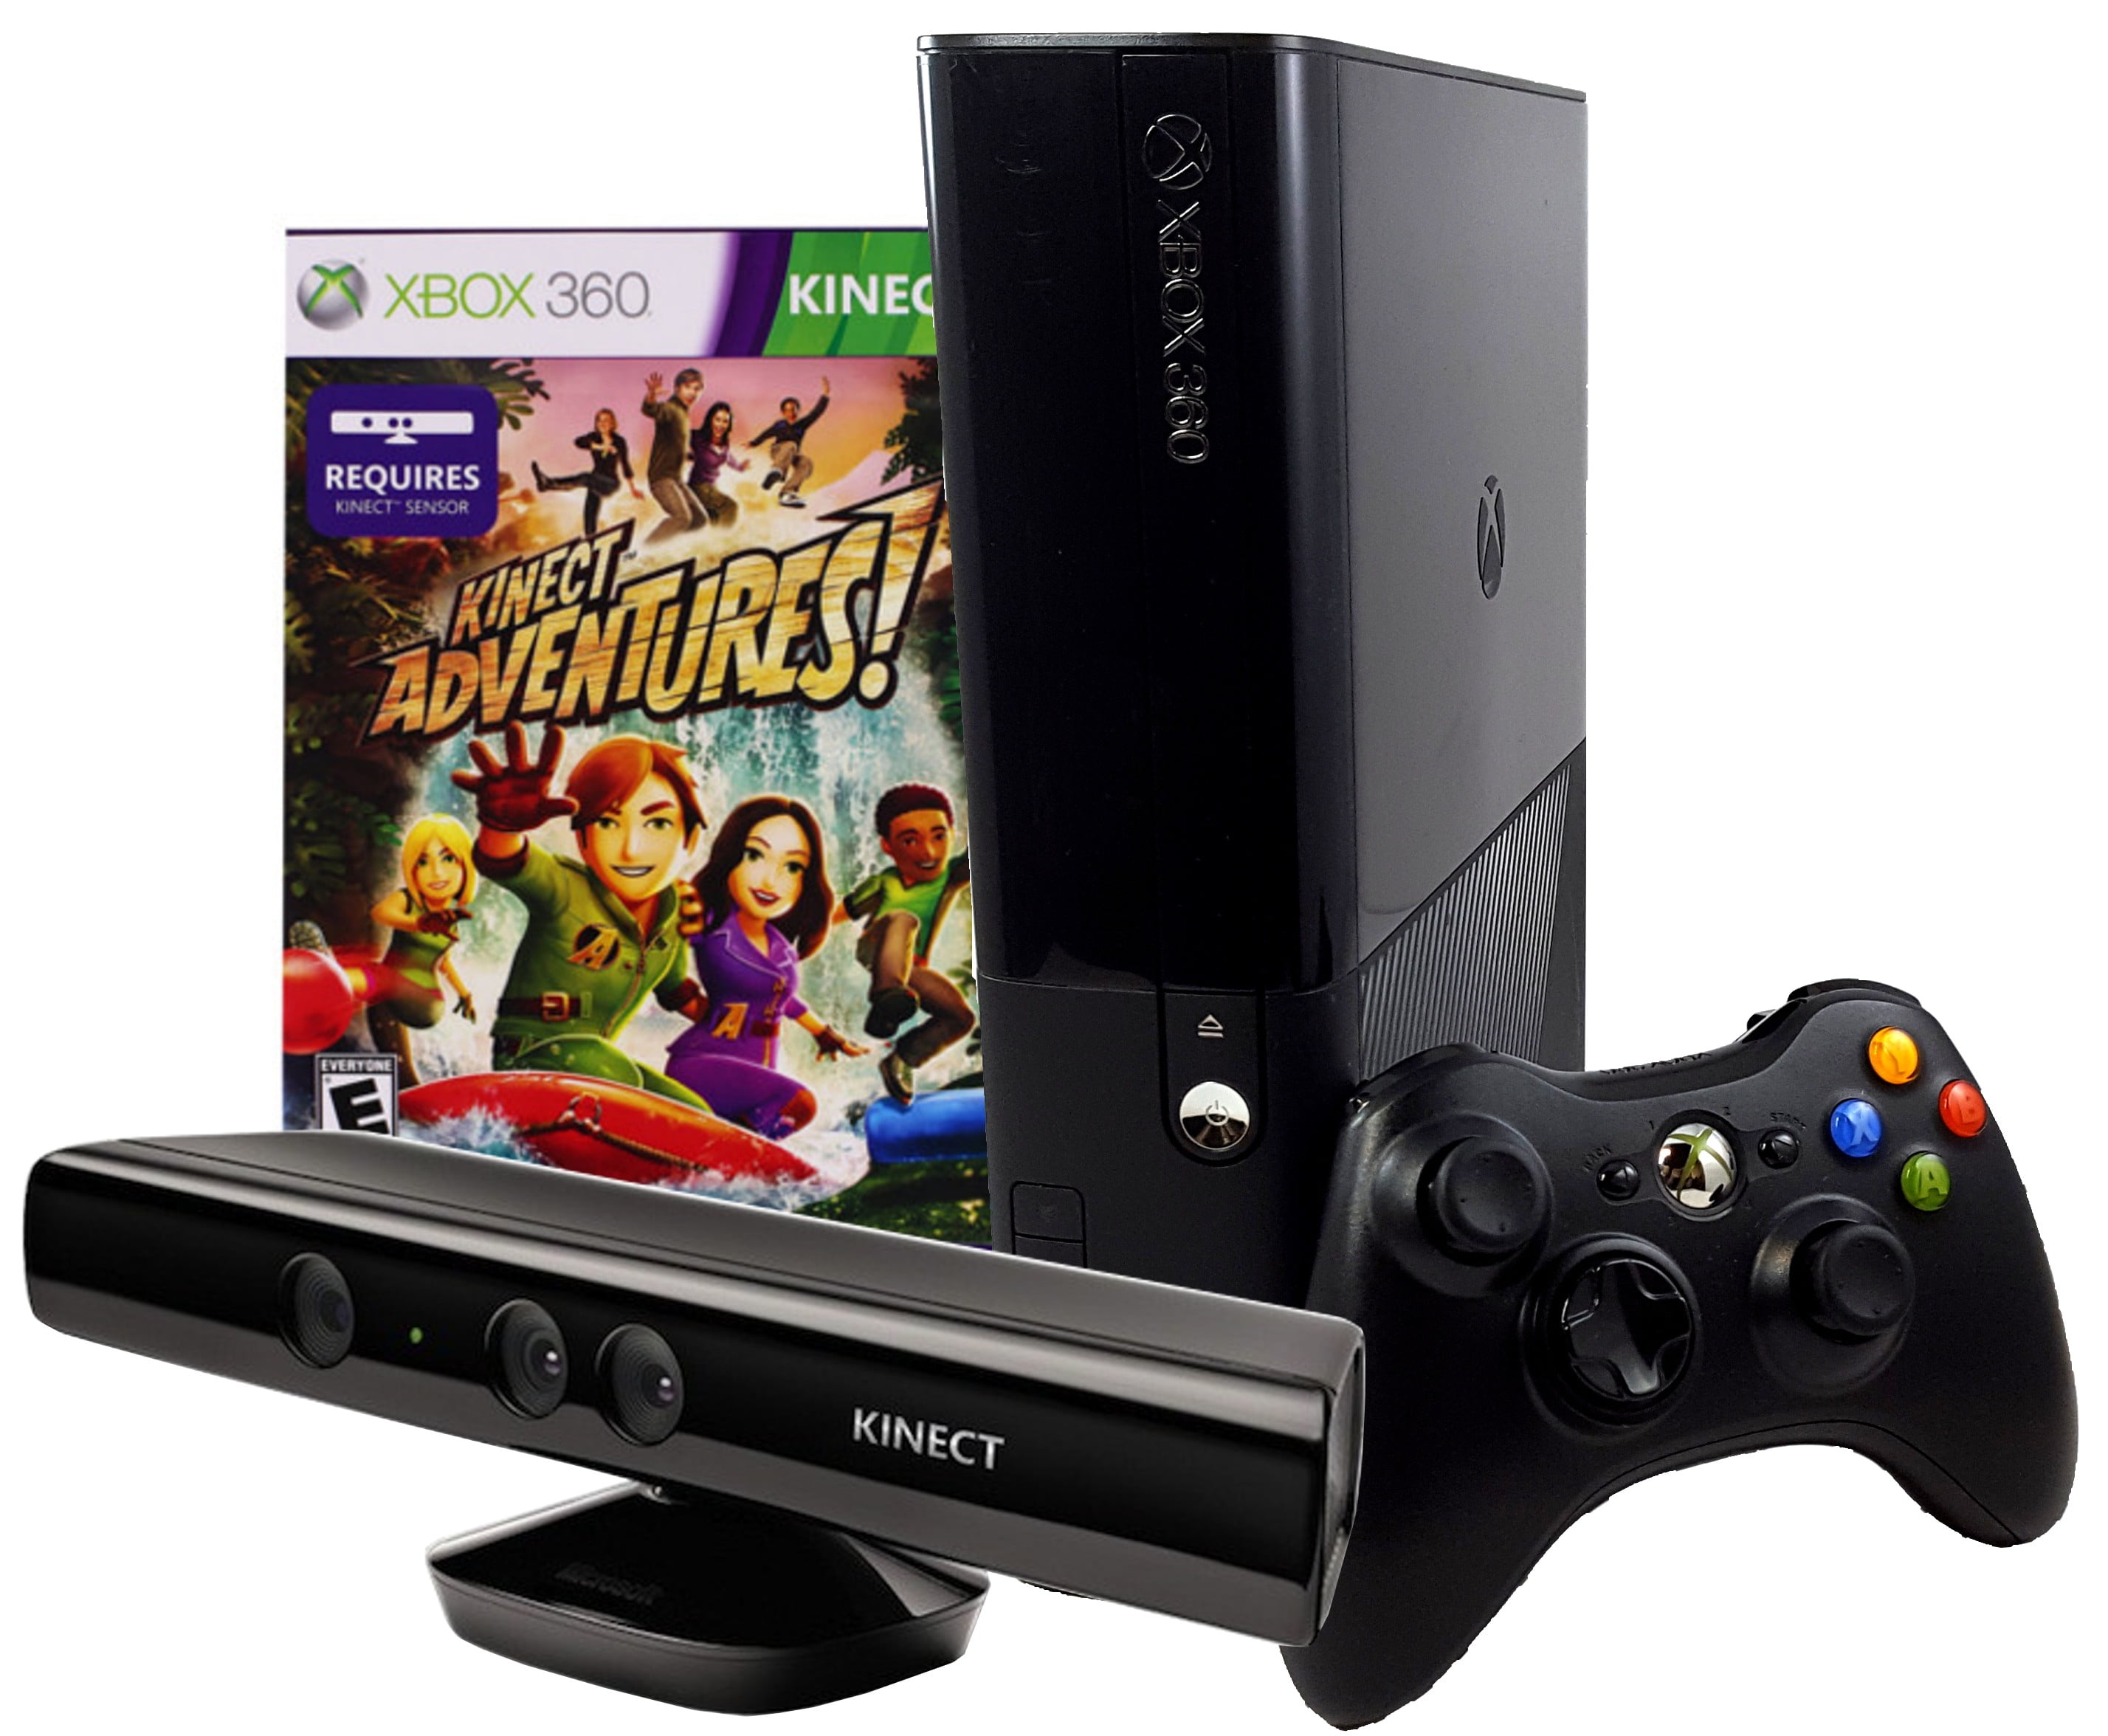 doel Kreunt Triatleet Restored Microsoft Xbox 360 E Slim 4GB Console with Kinect Sensor and  Kinect Adventures (Refurbished) - Walmart.com